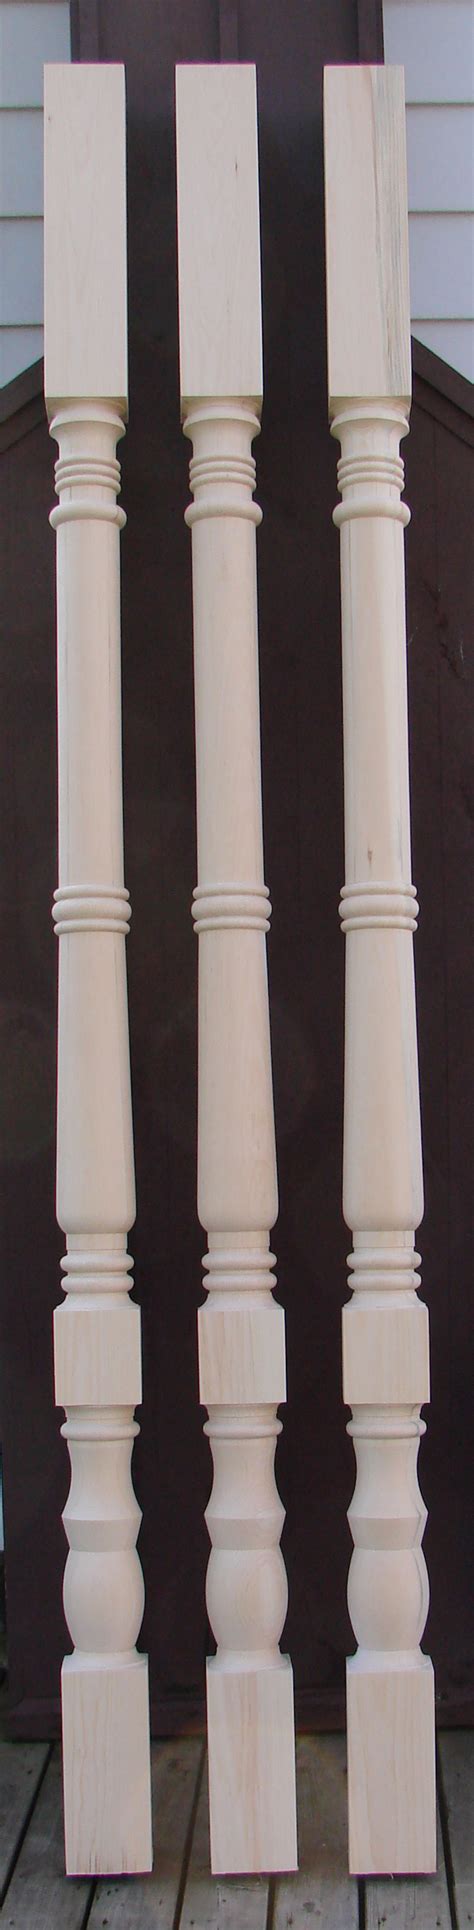 10 Tall Wood Custom Porch Posts Custom Porch Porch Posts Wood Turning